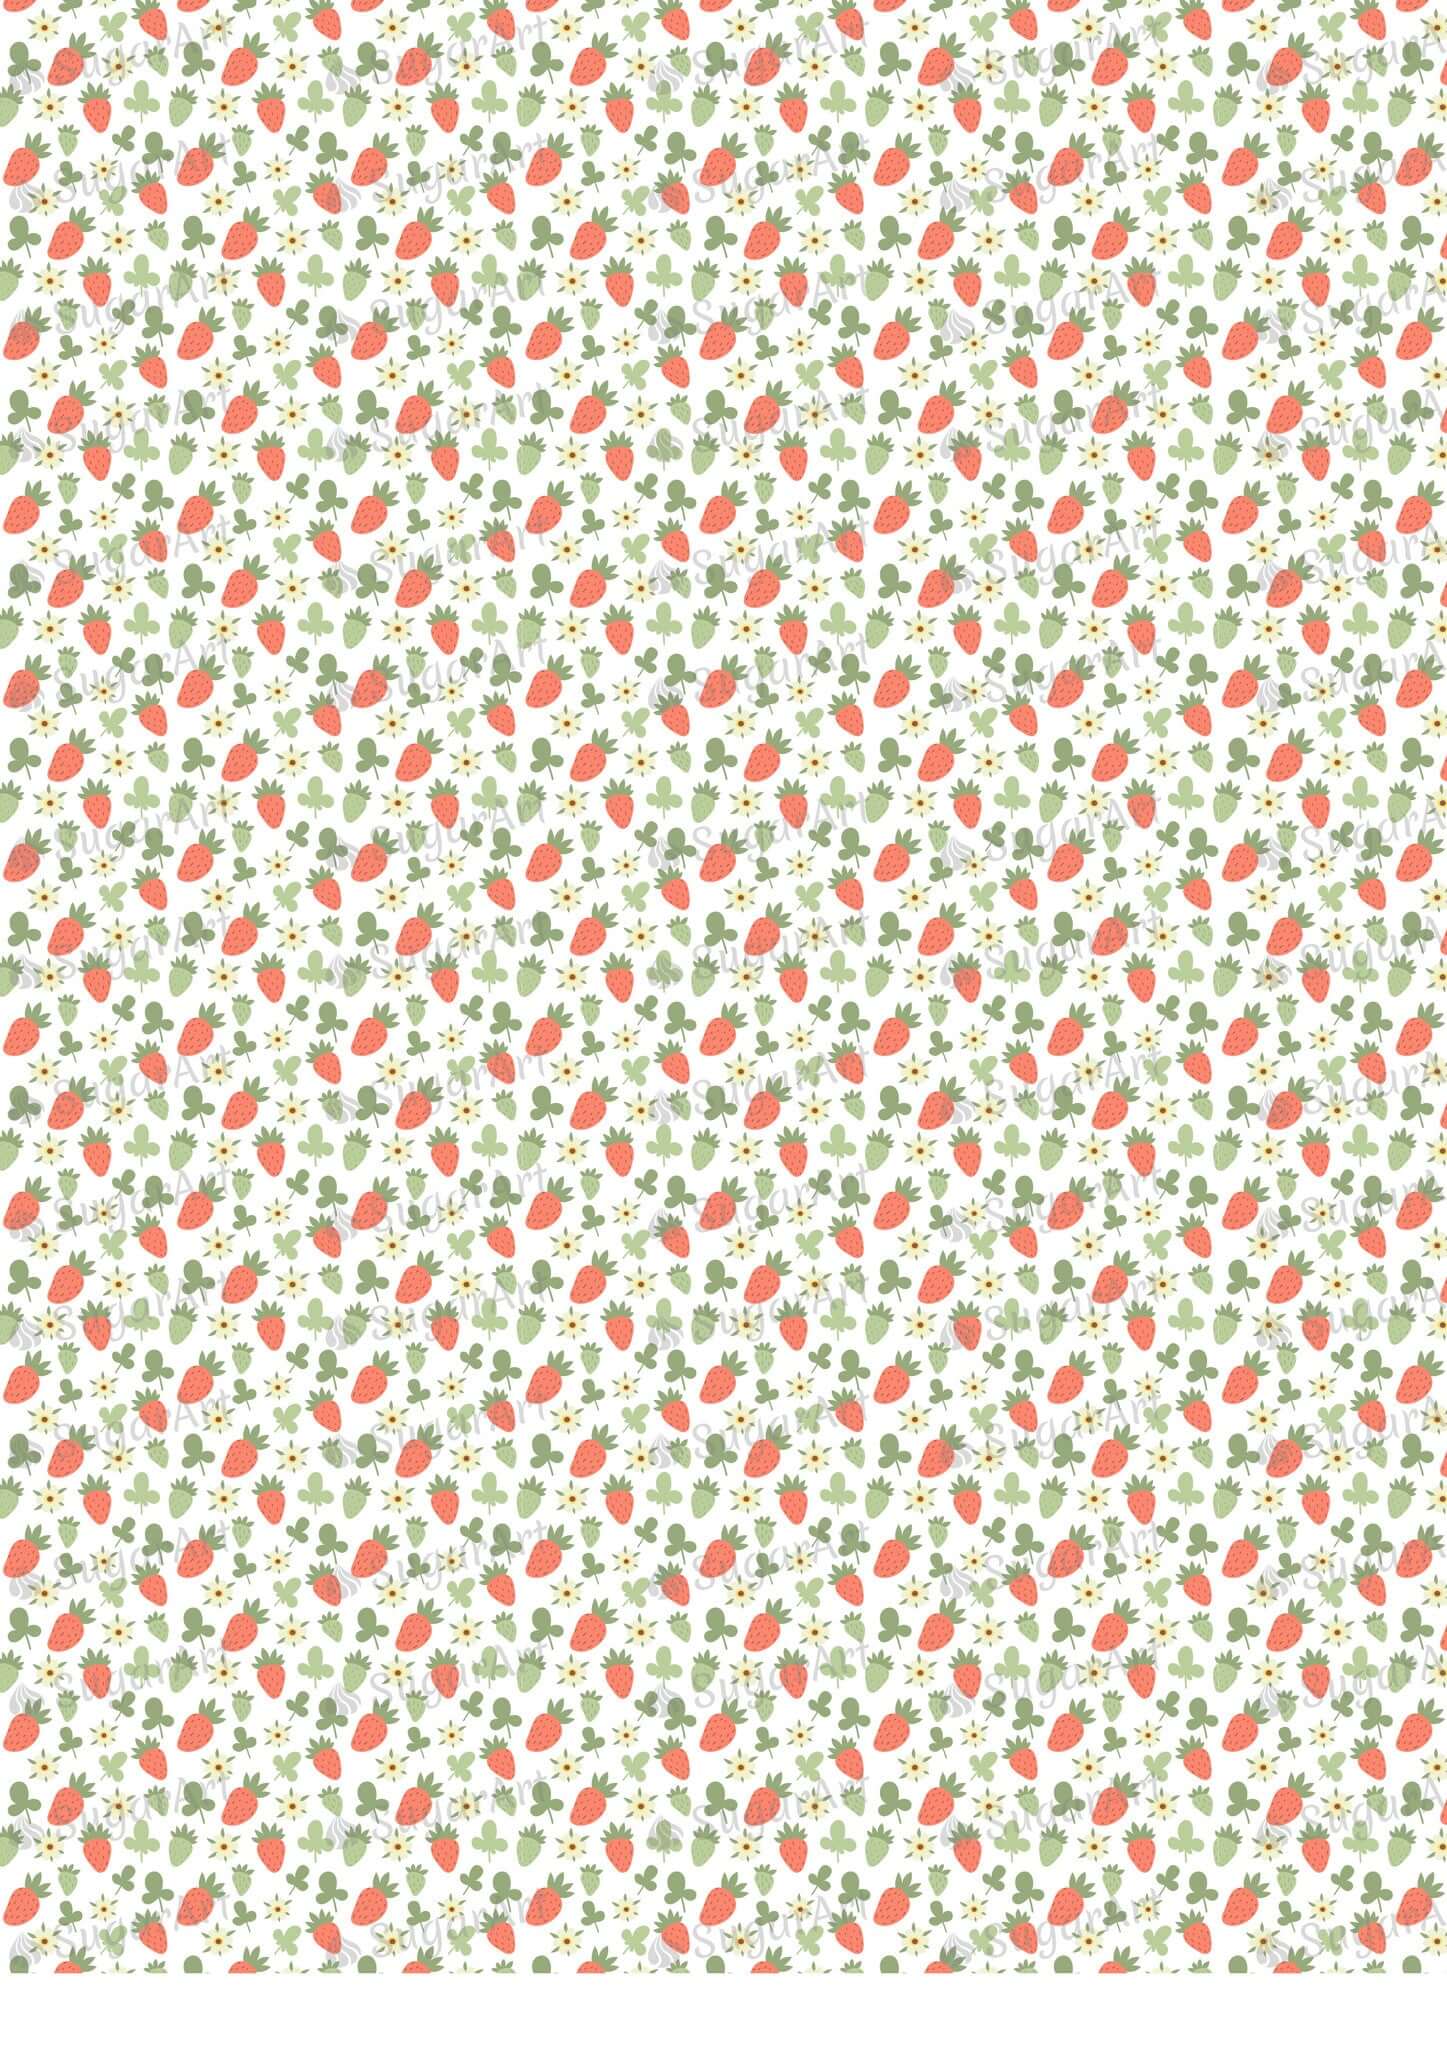 Pattern of Hand Drawn Strawberries and Flowers - BSA016-Sugar Stamp sheets-Sugar Art